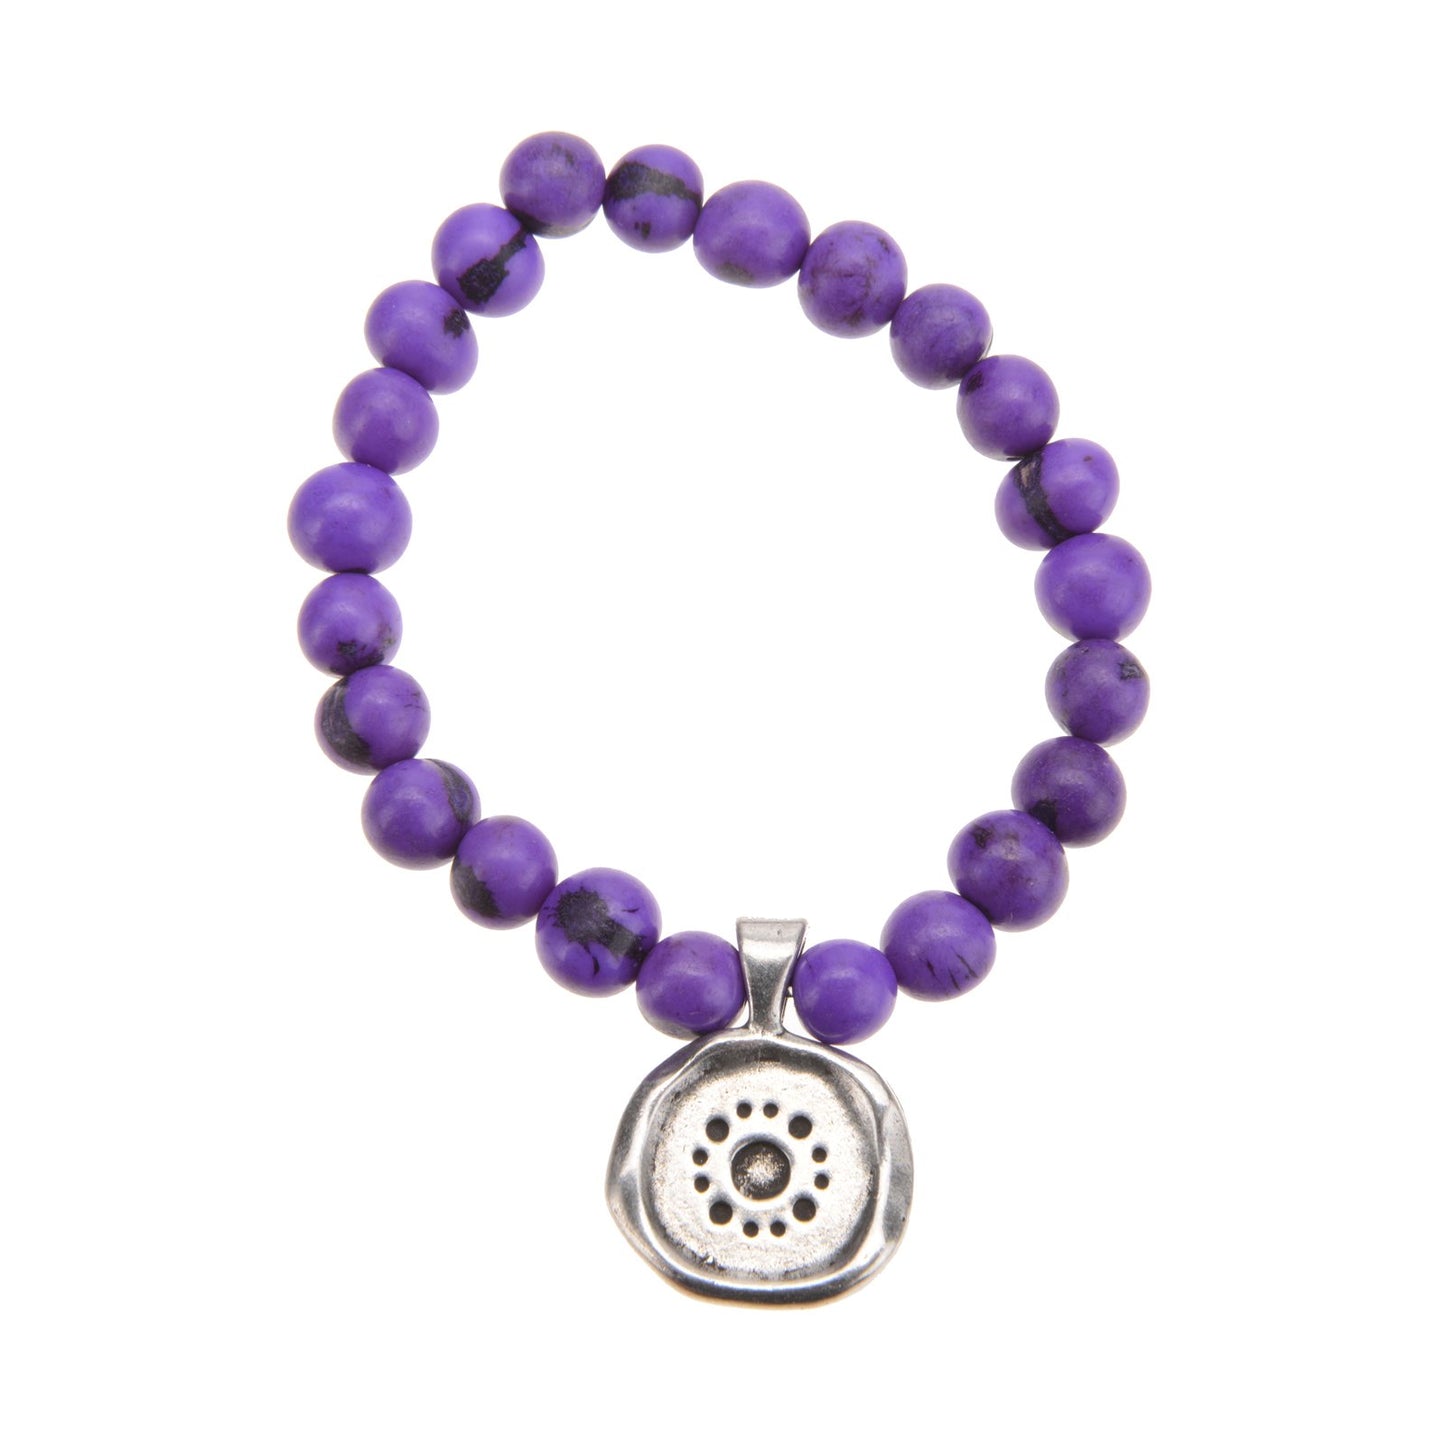 Acai Seeds Of Life Bracelet with Wax Seal - Purple Beads